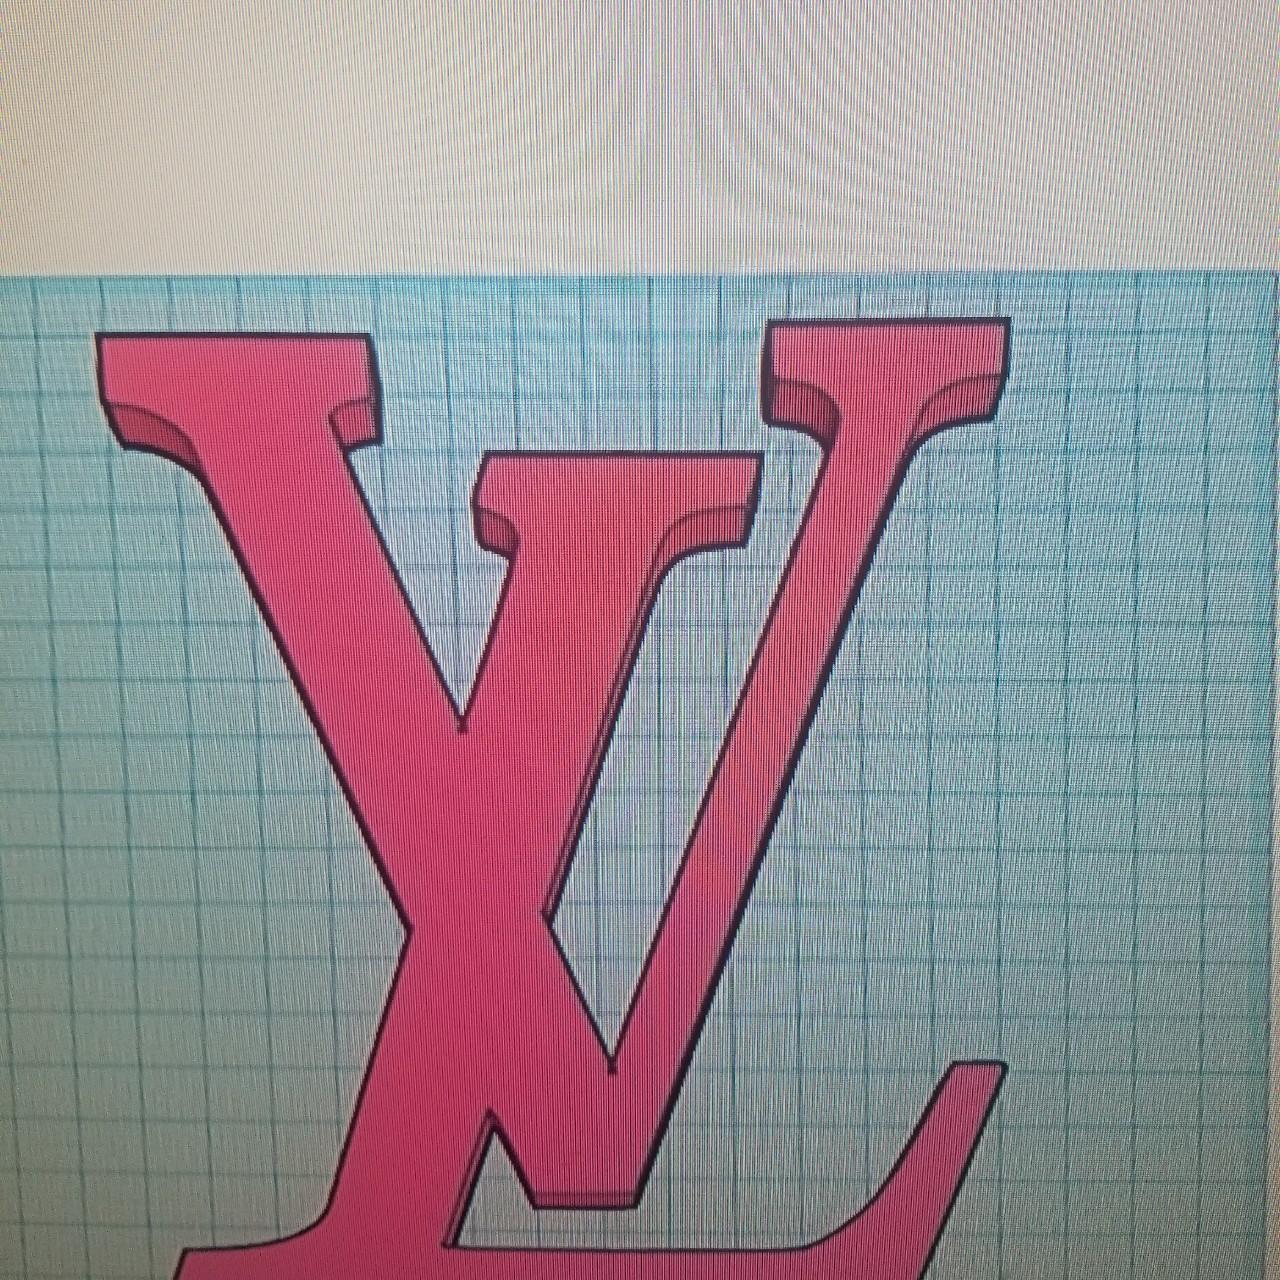 How to Draw Louis Vuitton Logo 